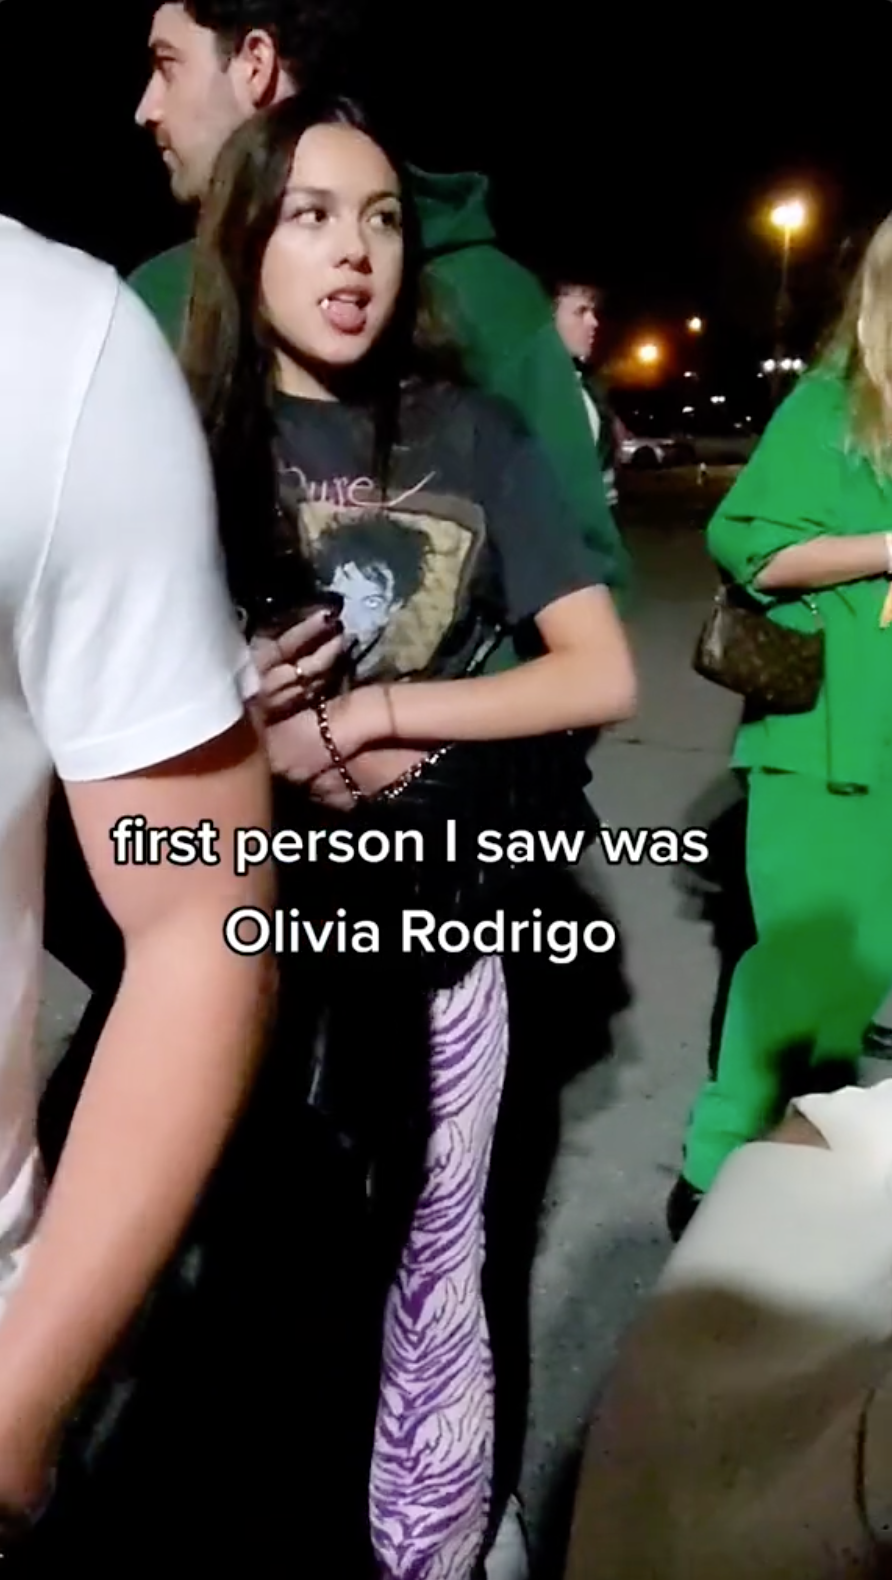 Olivia Rodrigo cuddling with a new man